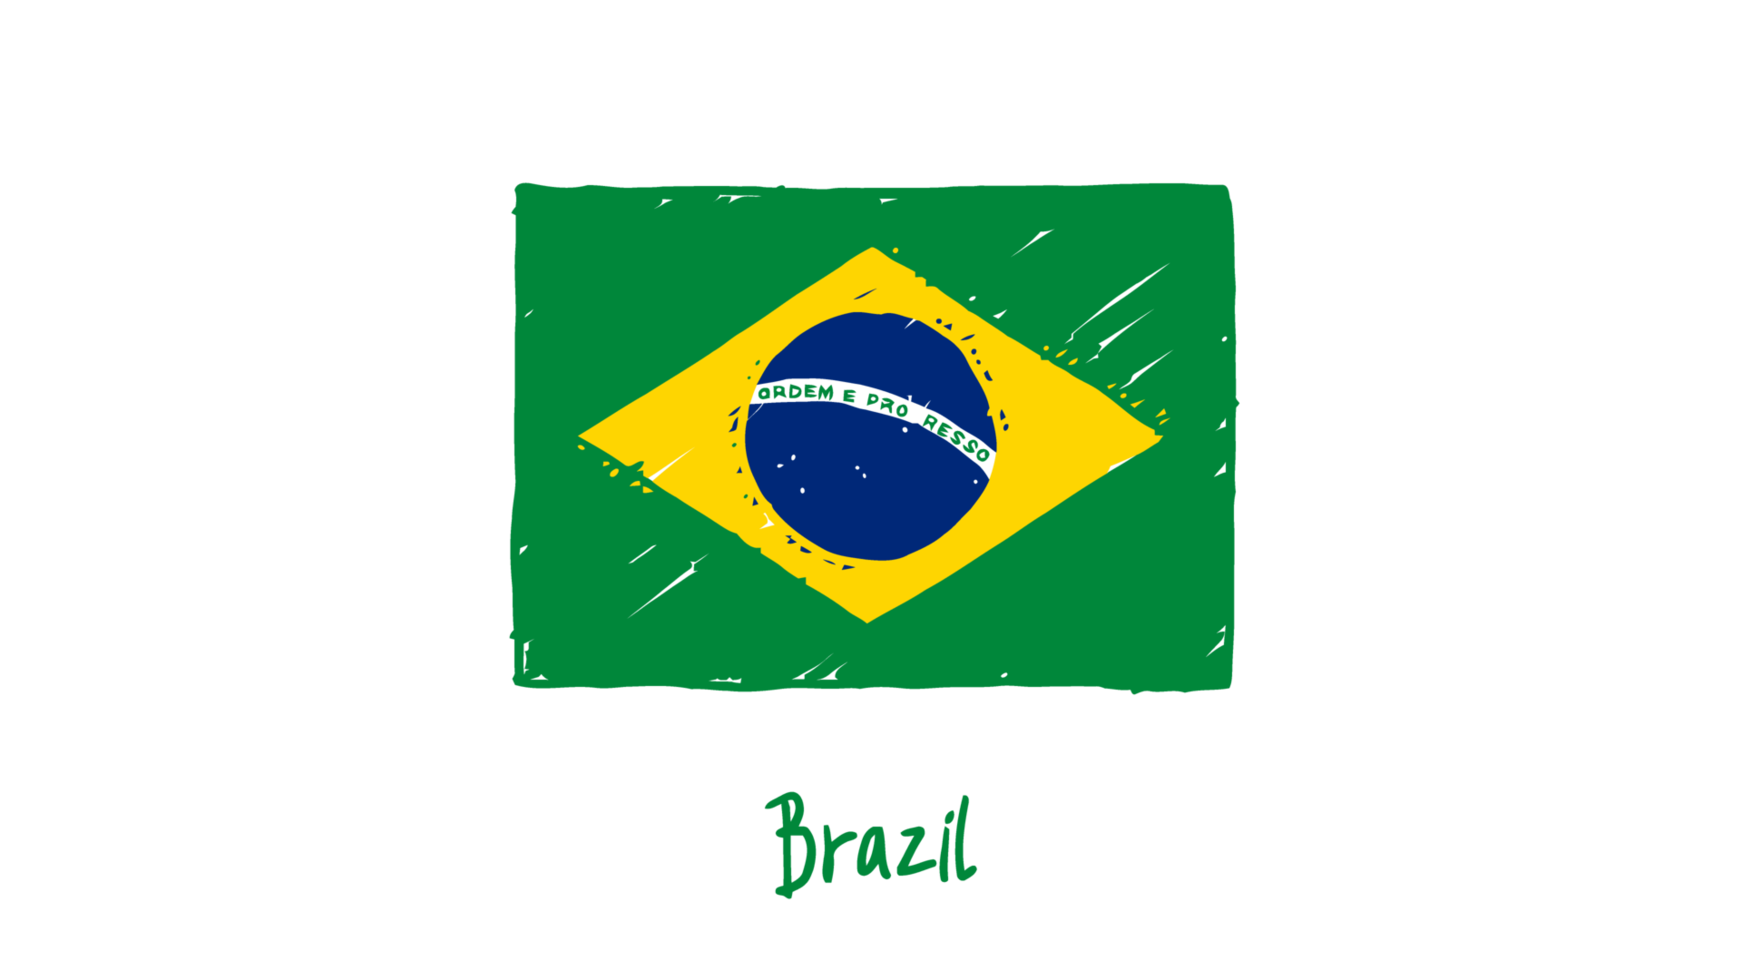 Brazil National Country Flag Pencil Color Sketch Illustration png